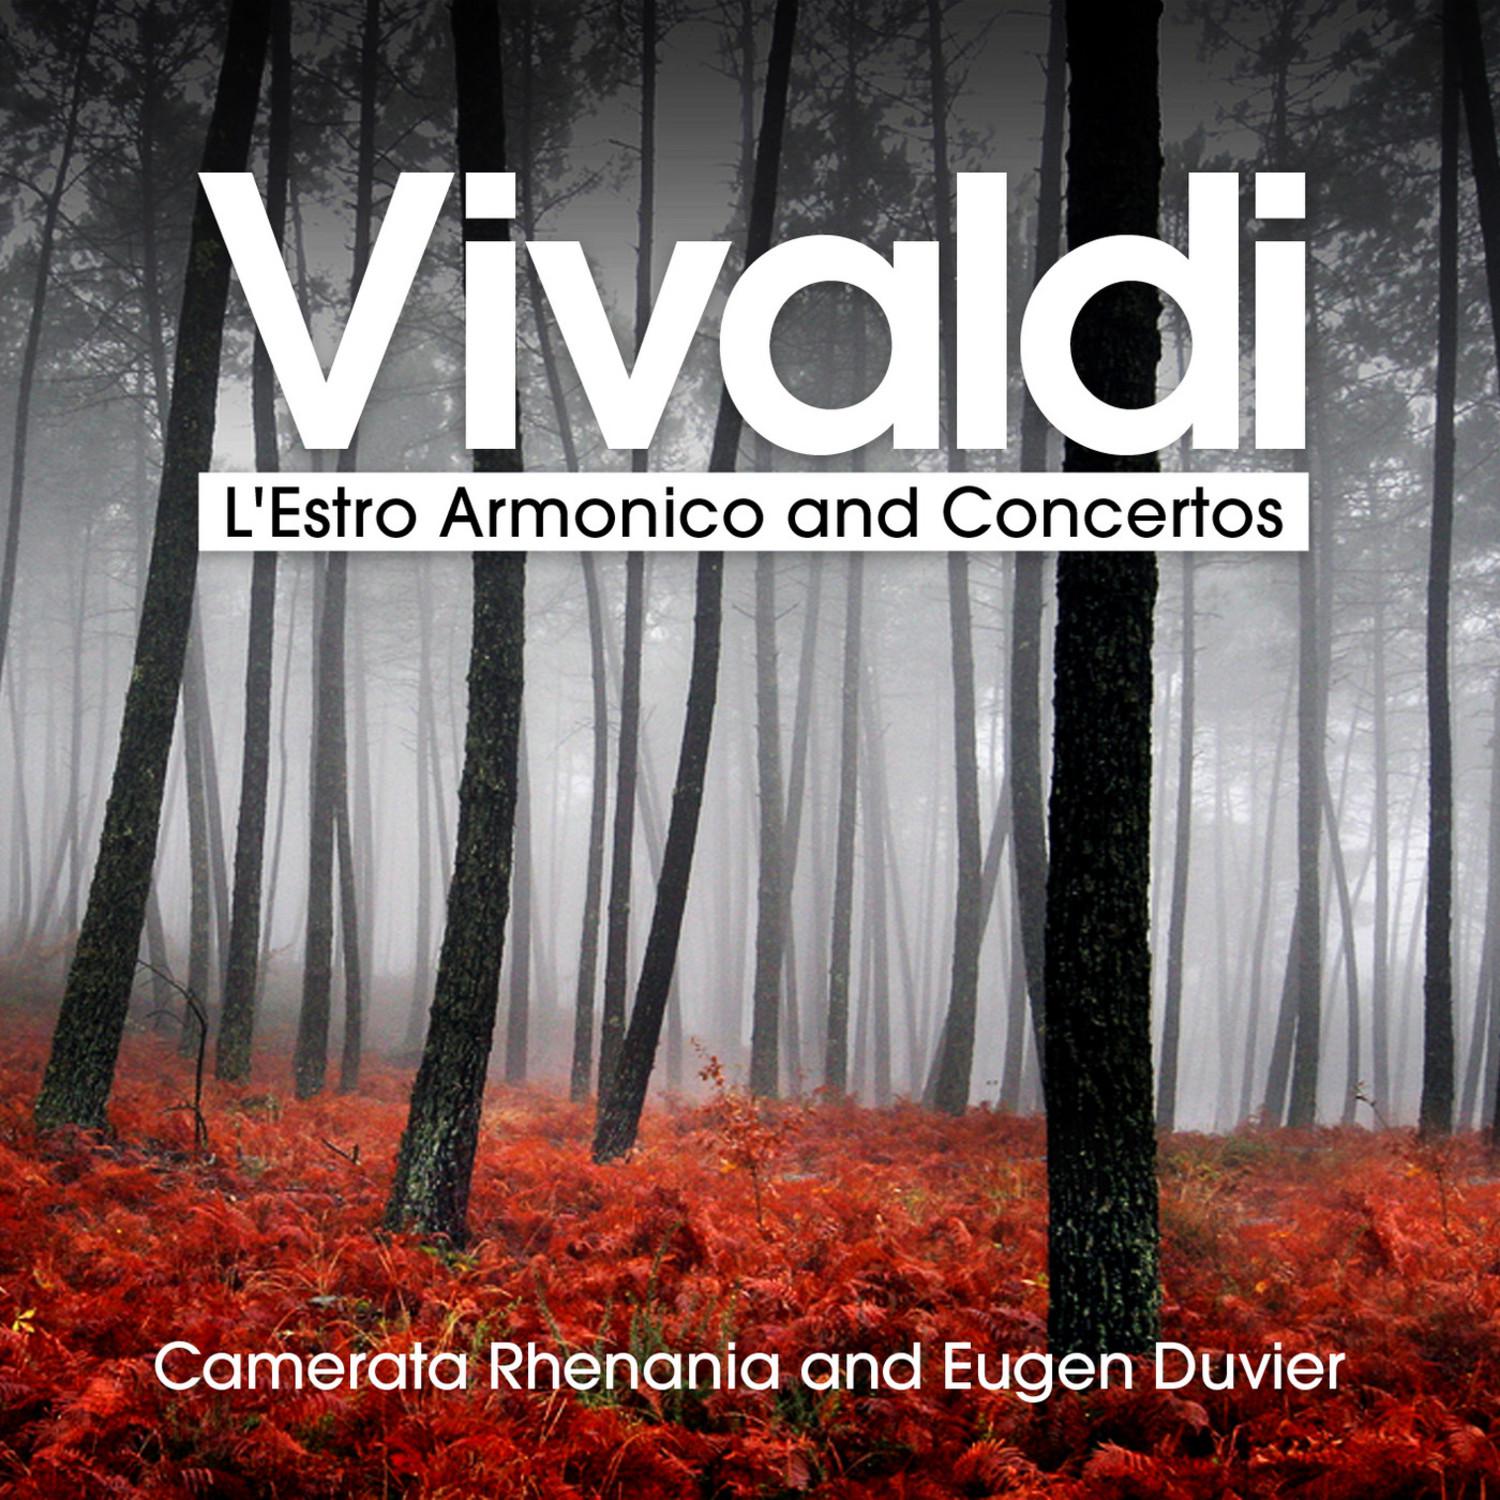 L'Estro Armonico, Op. 3 - Concerto No. 5 in A Major for 2 Violins and Strings, RV 519: I. Allegro